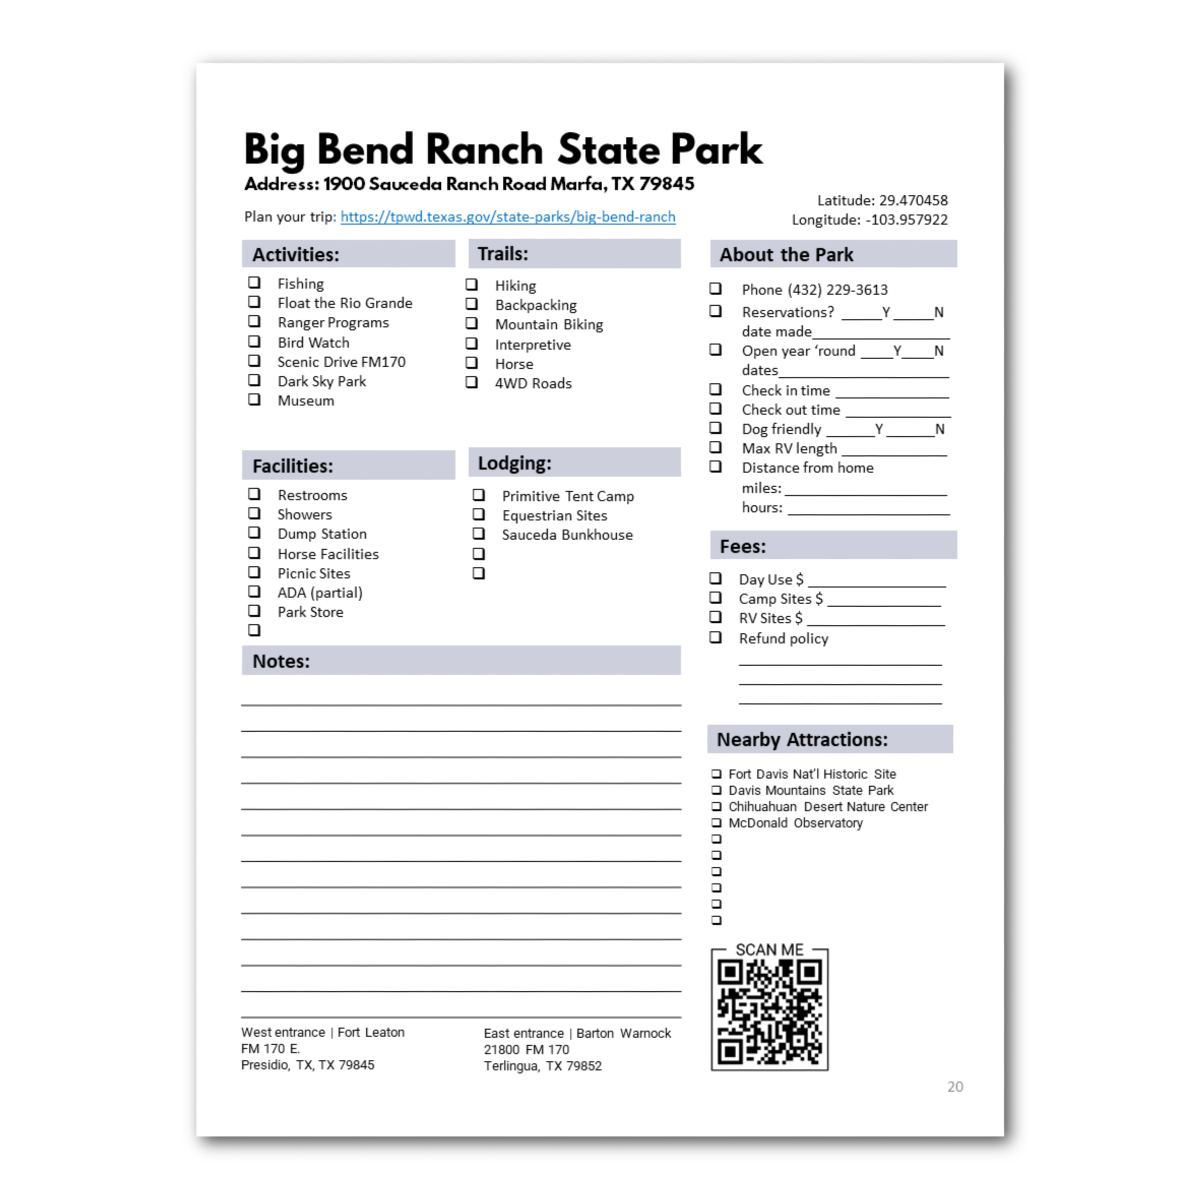 Texas State Parks Bucket Journal - Spiral